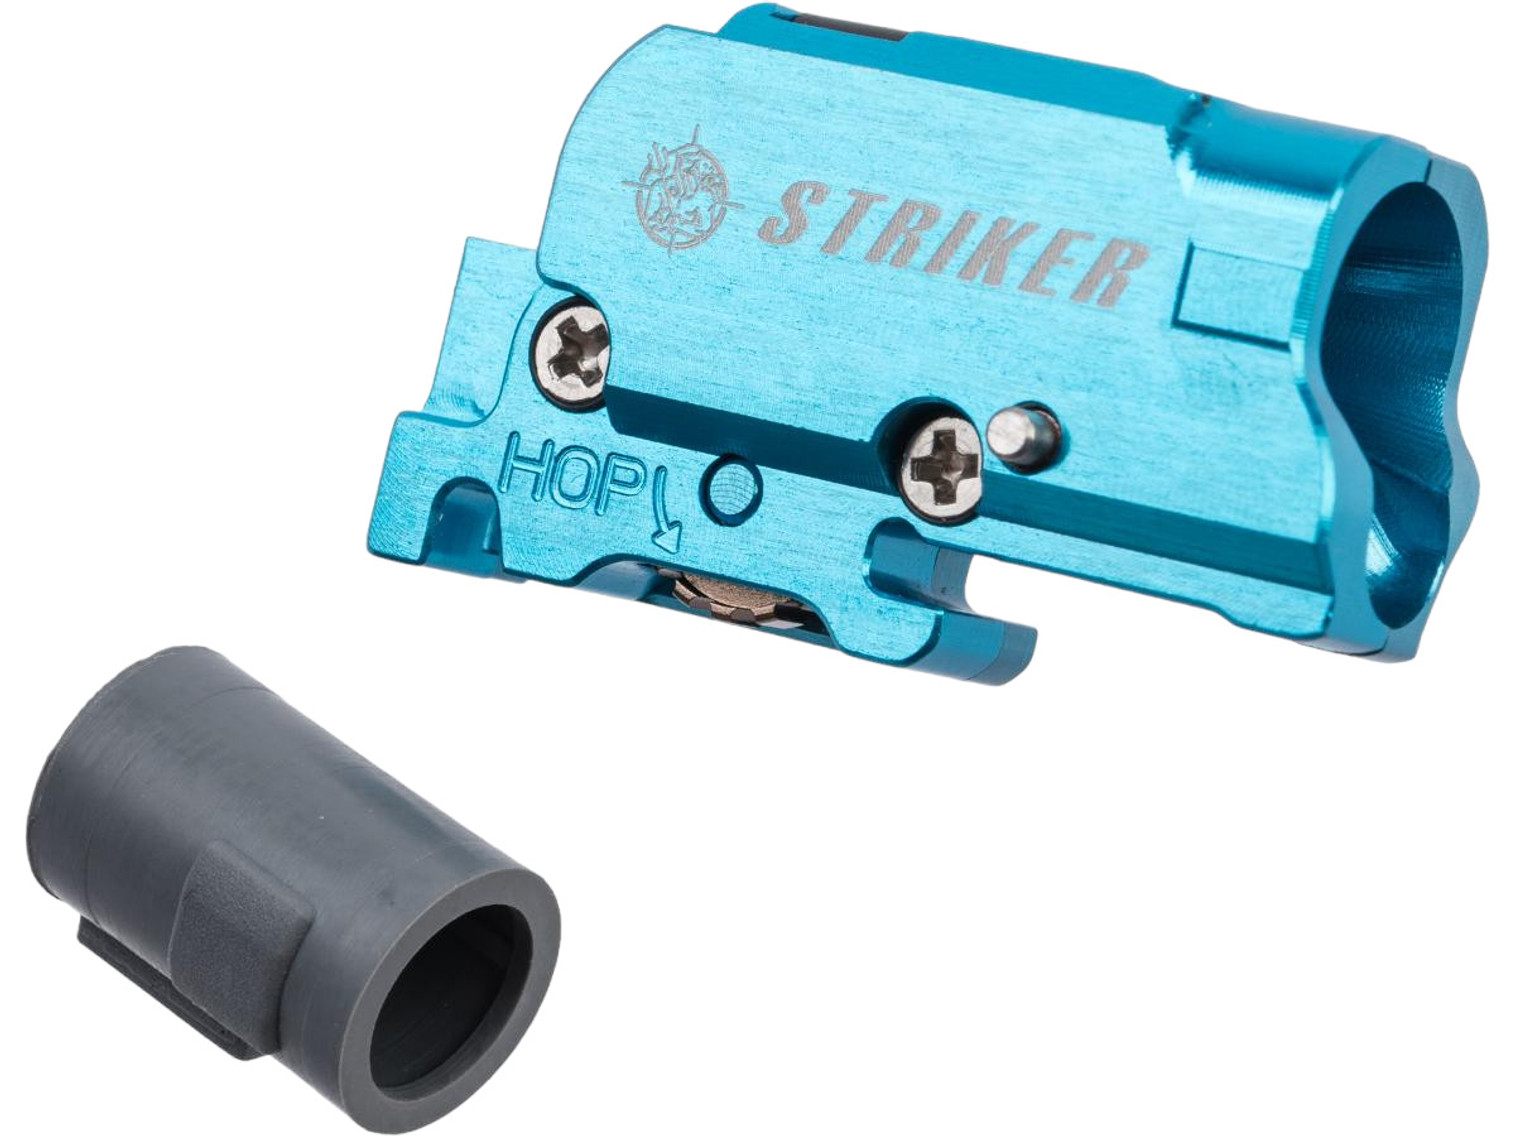 Poseidon Striker Hop Up Chamber Kit for Gas Blowback Pistols (Model: TM/AW BLU 17/18)